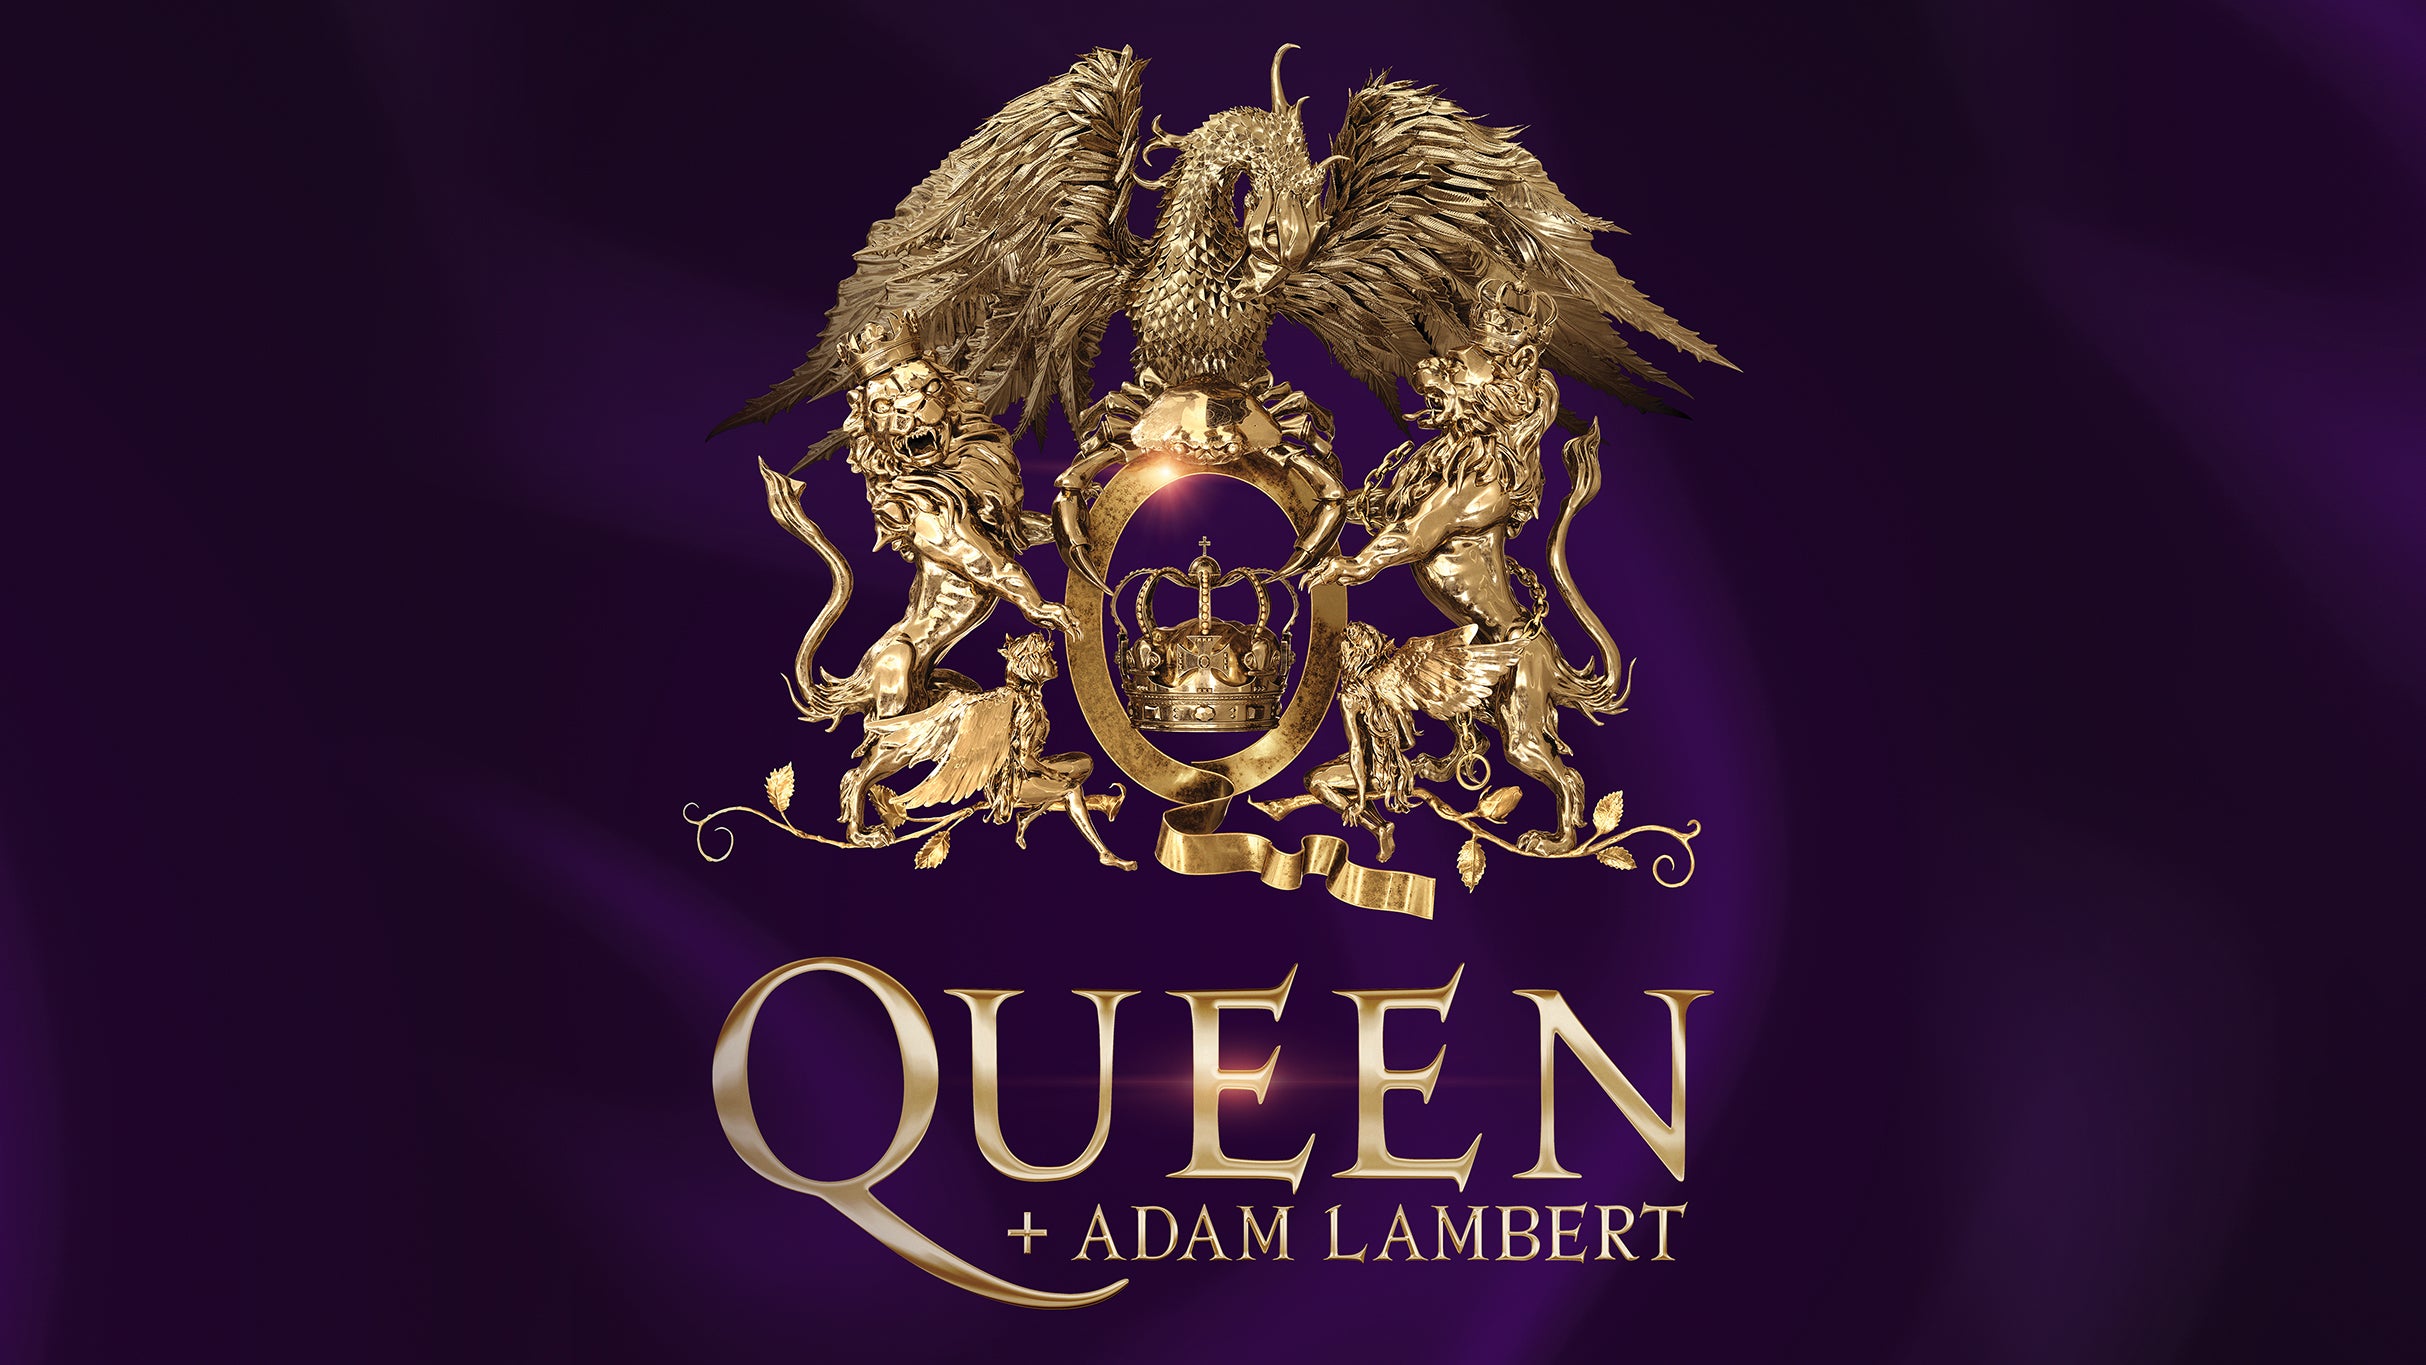 Queen + Adam Lambert Sièges Platine in Montreal promo photo for Platinum presale offer code